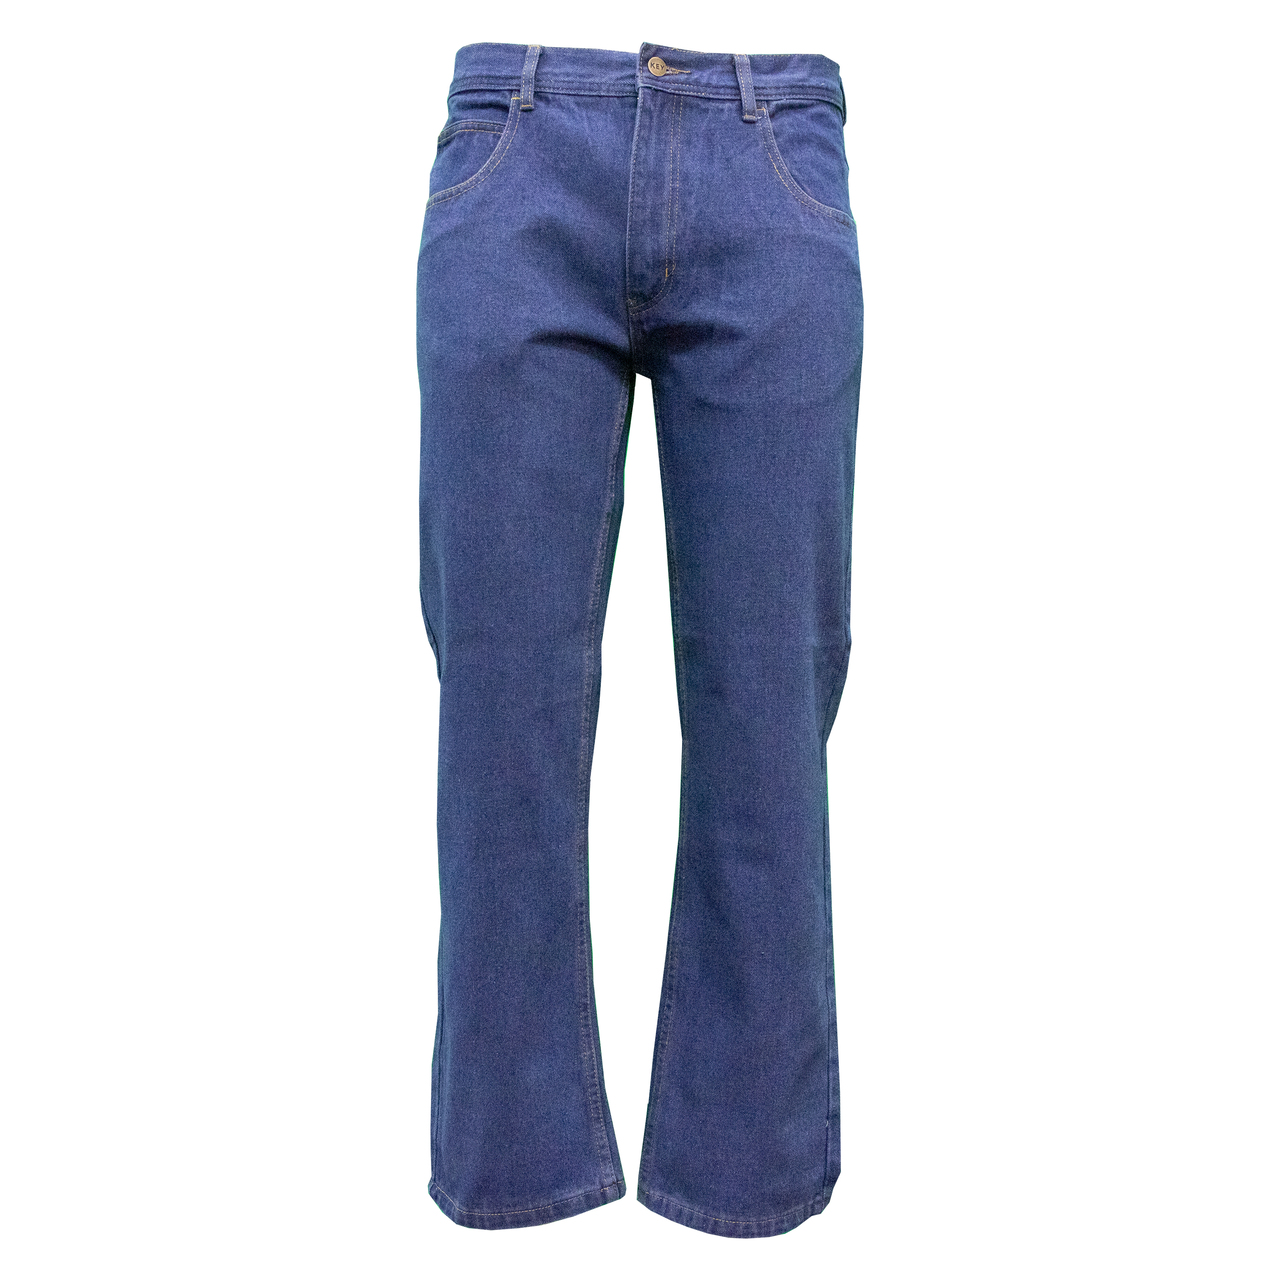 Men's Performance 5-Pocket Jean